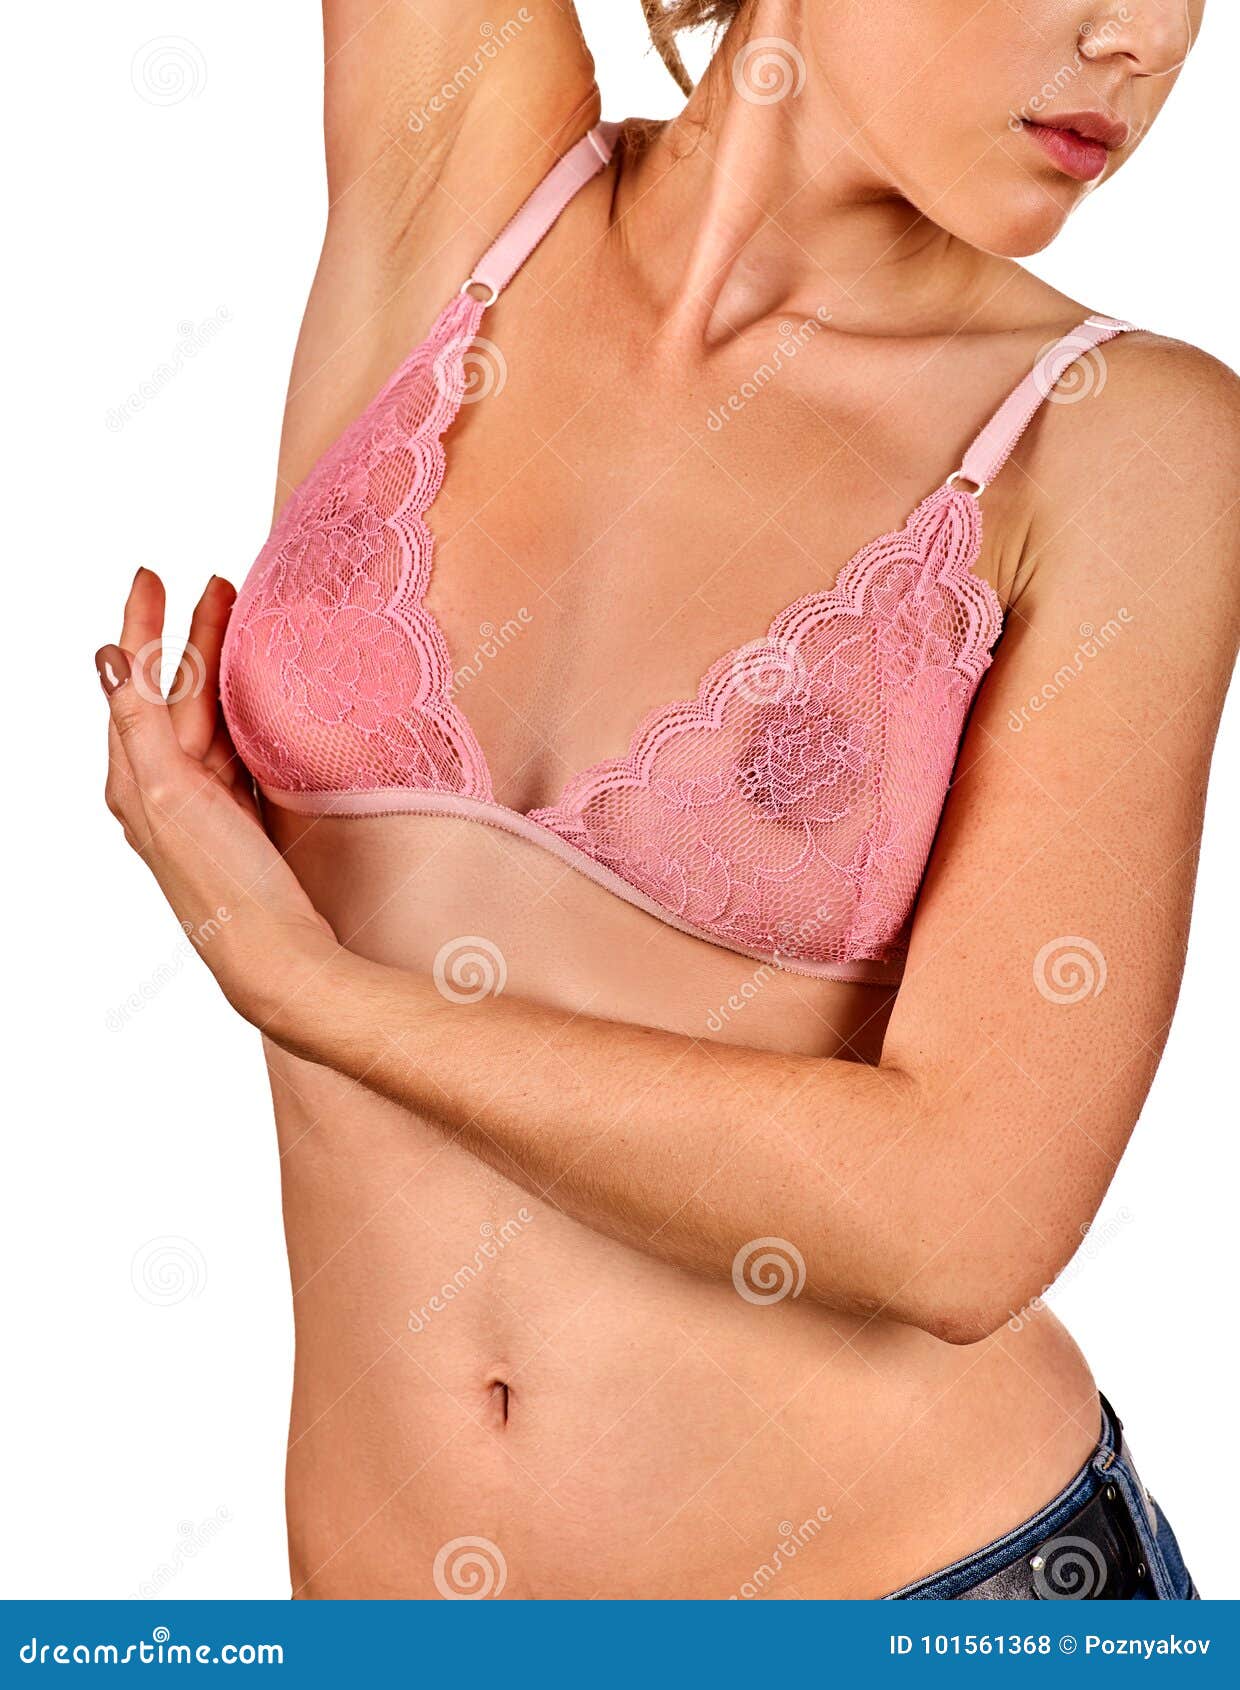 Breast Self Exam of Women. Woman Wearing Bra. Stock Photo - Image